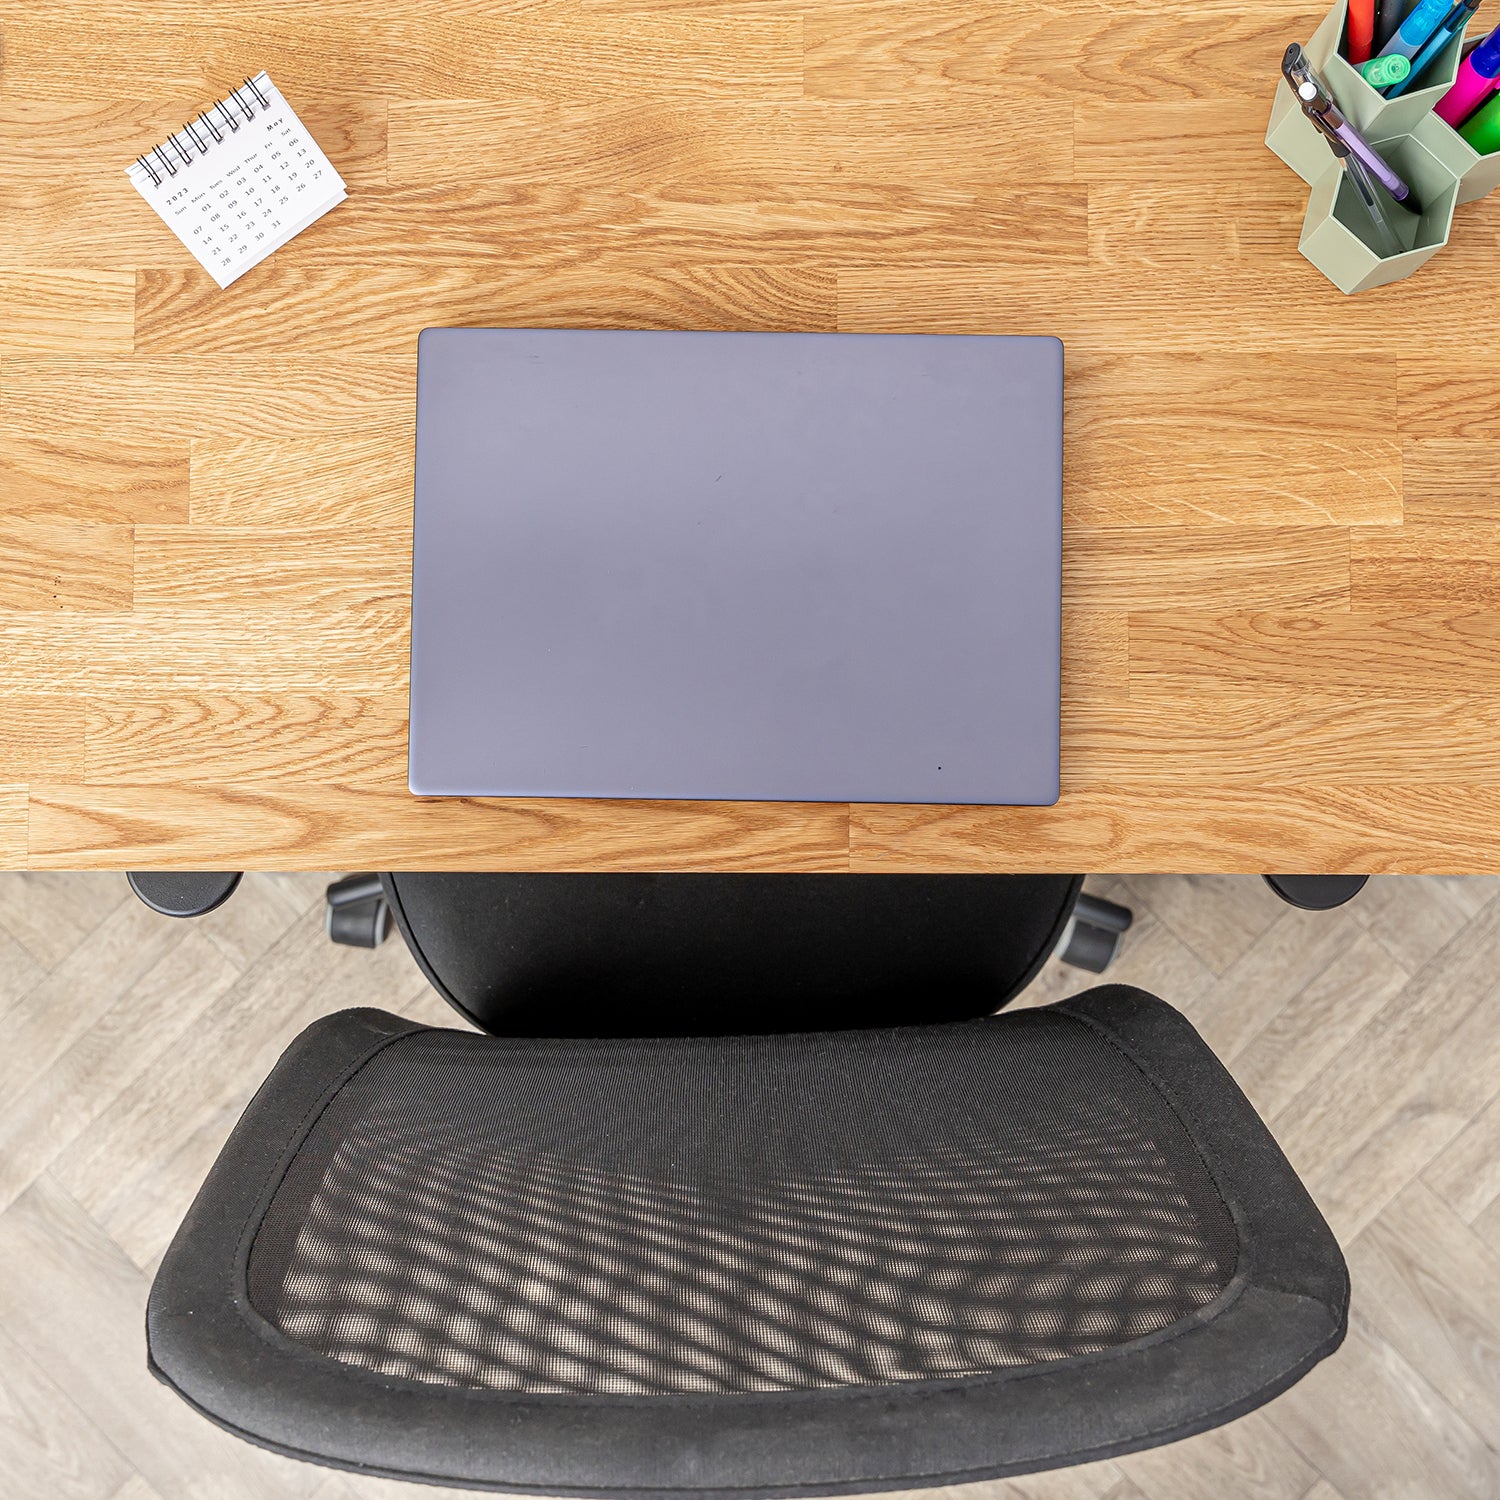 Oak Solid Wood Desk with Black Hairpin Legs - 40mm thick desktop